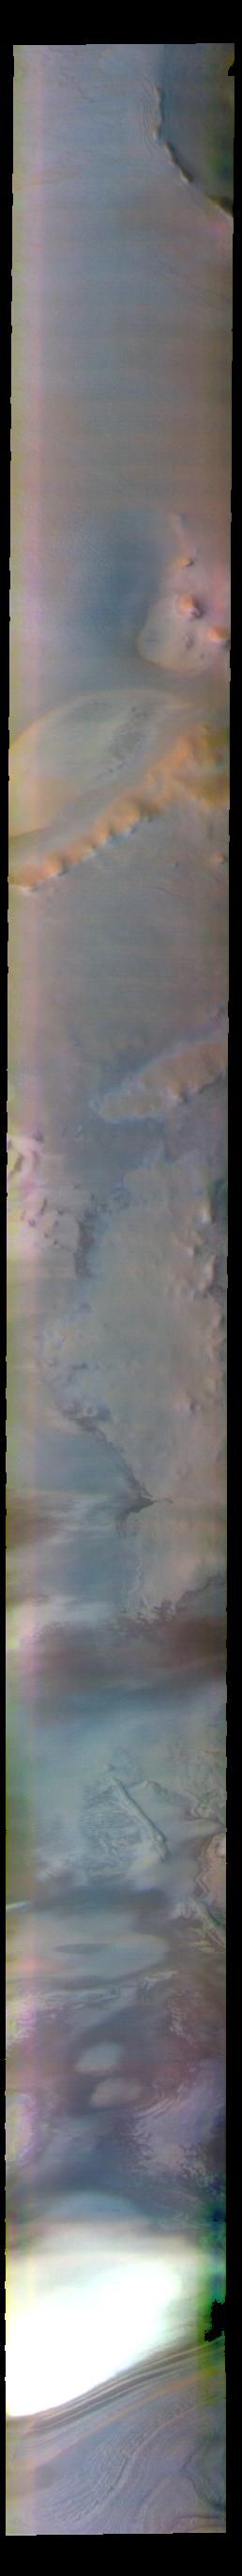 PIA25051: Argentea Planum - False Color